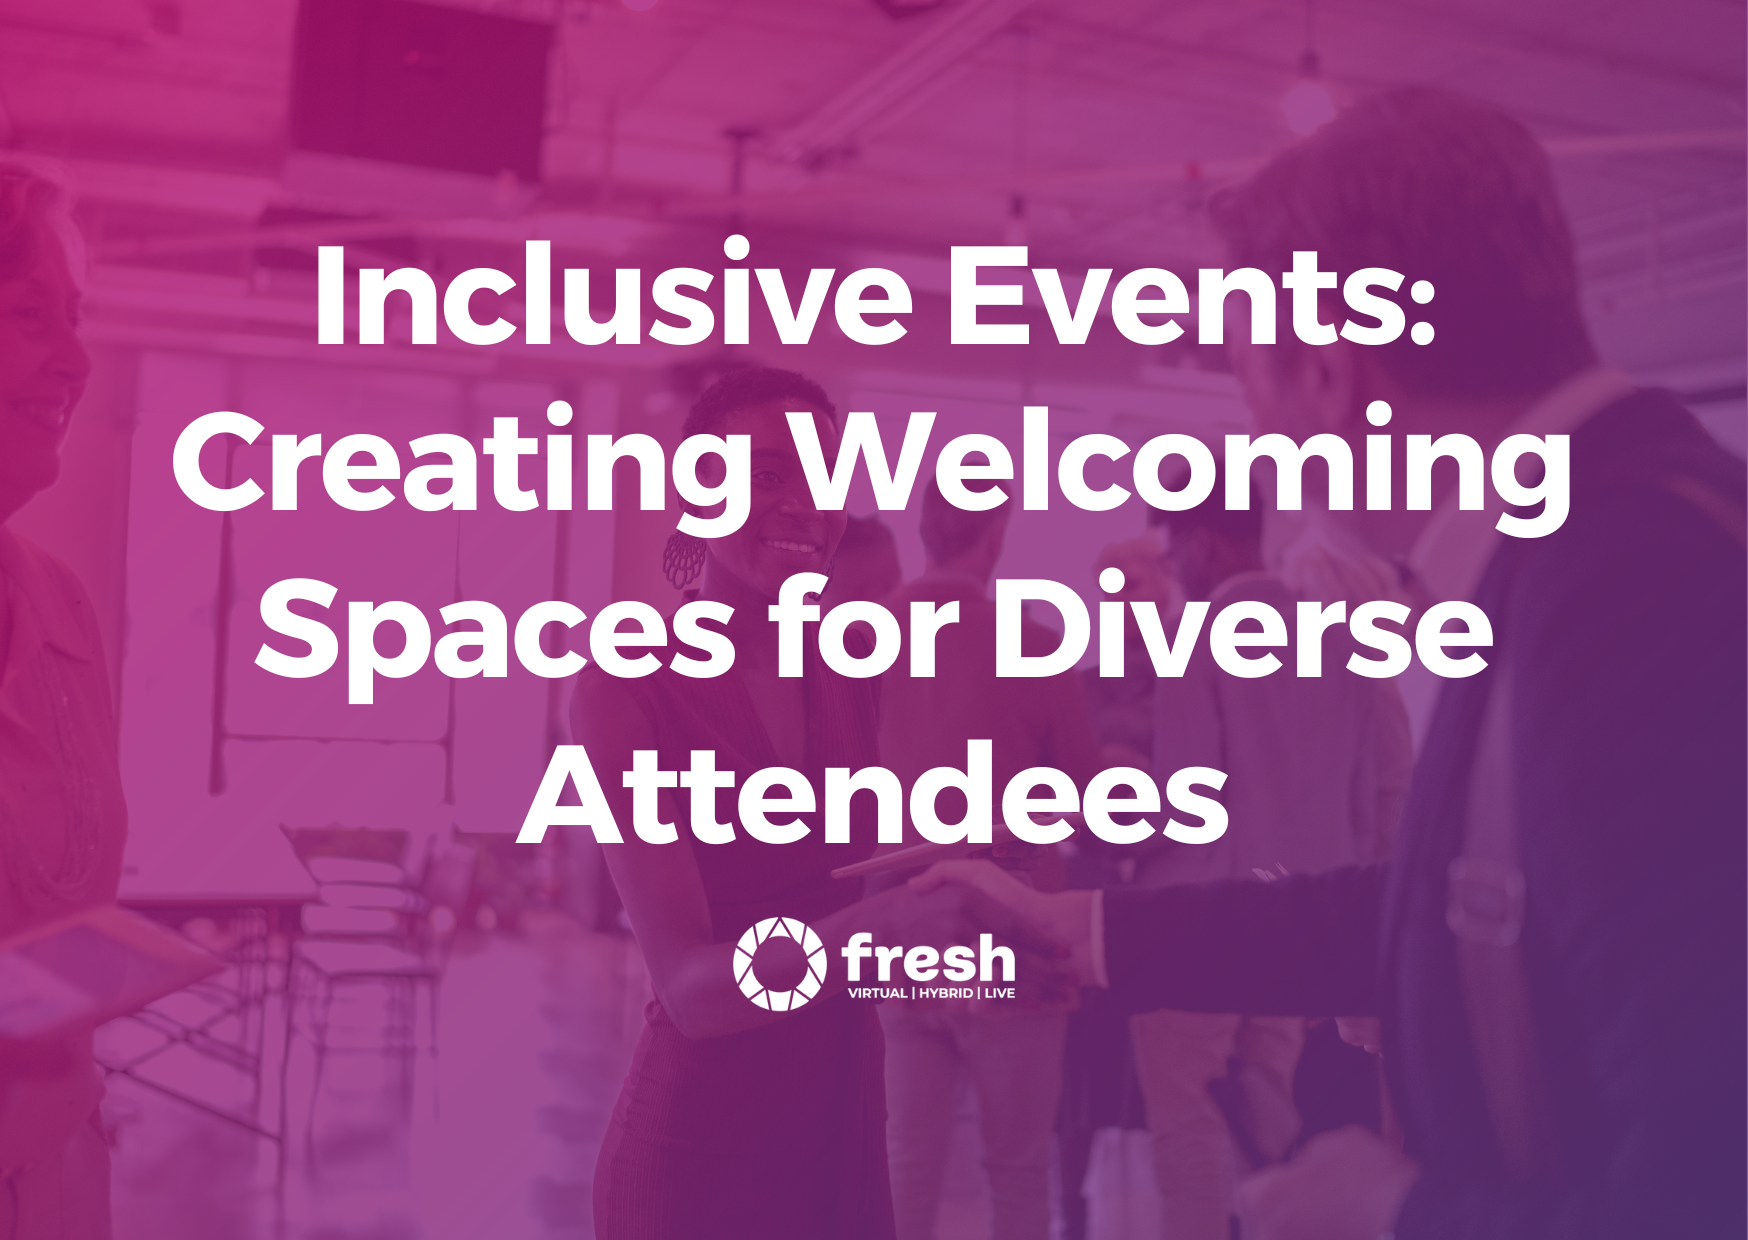 Inclusive events